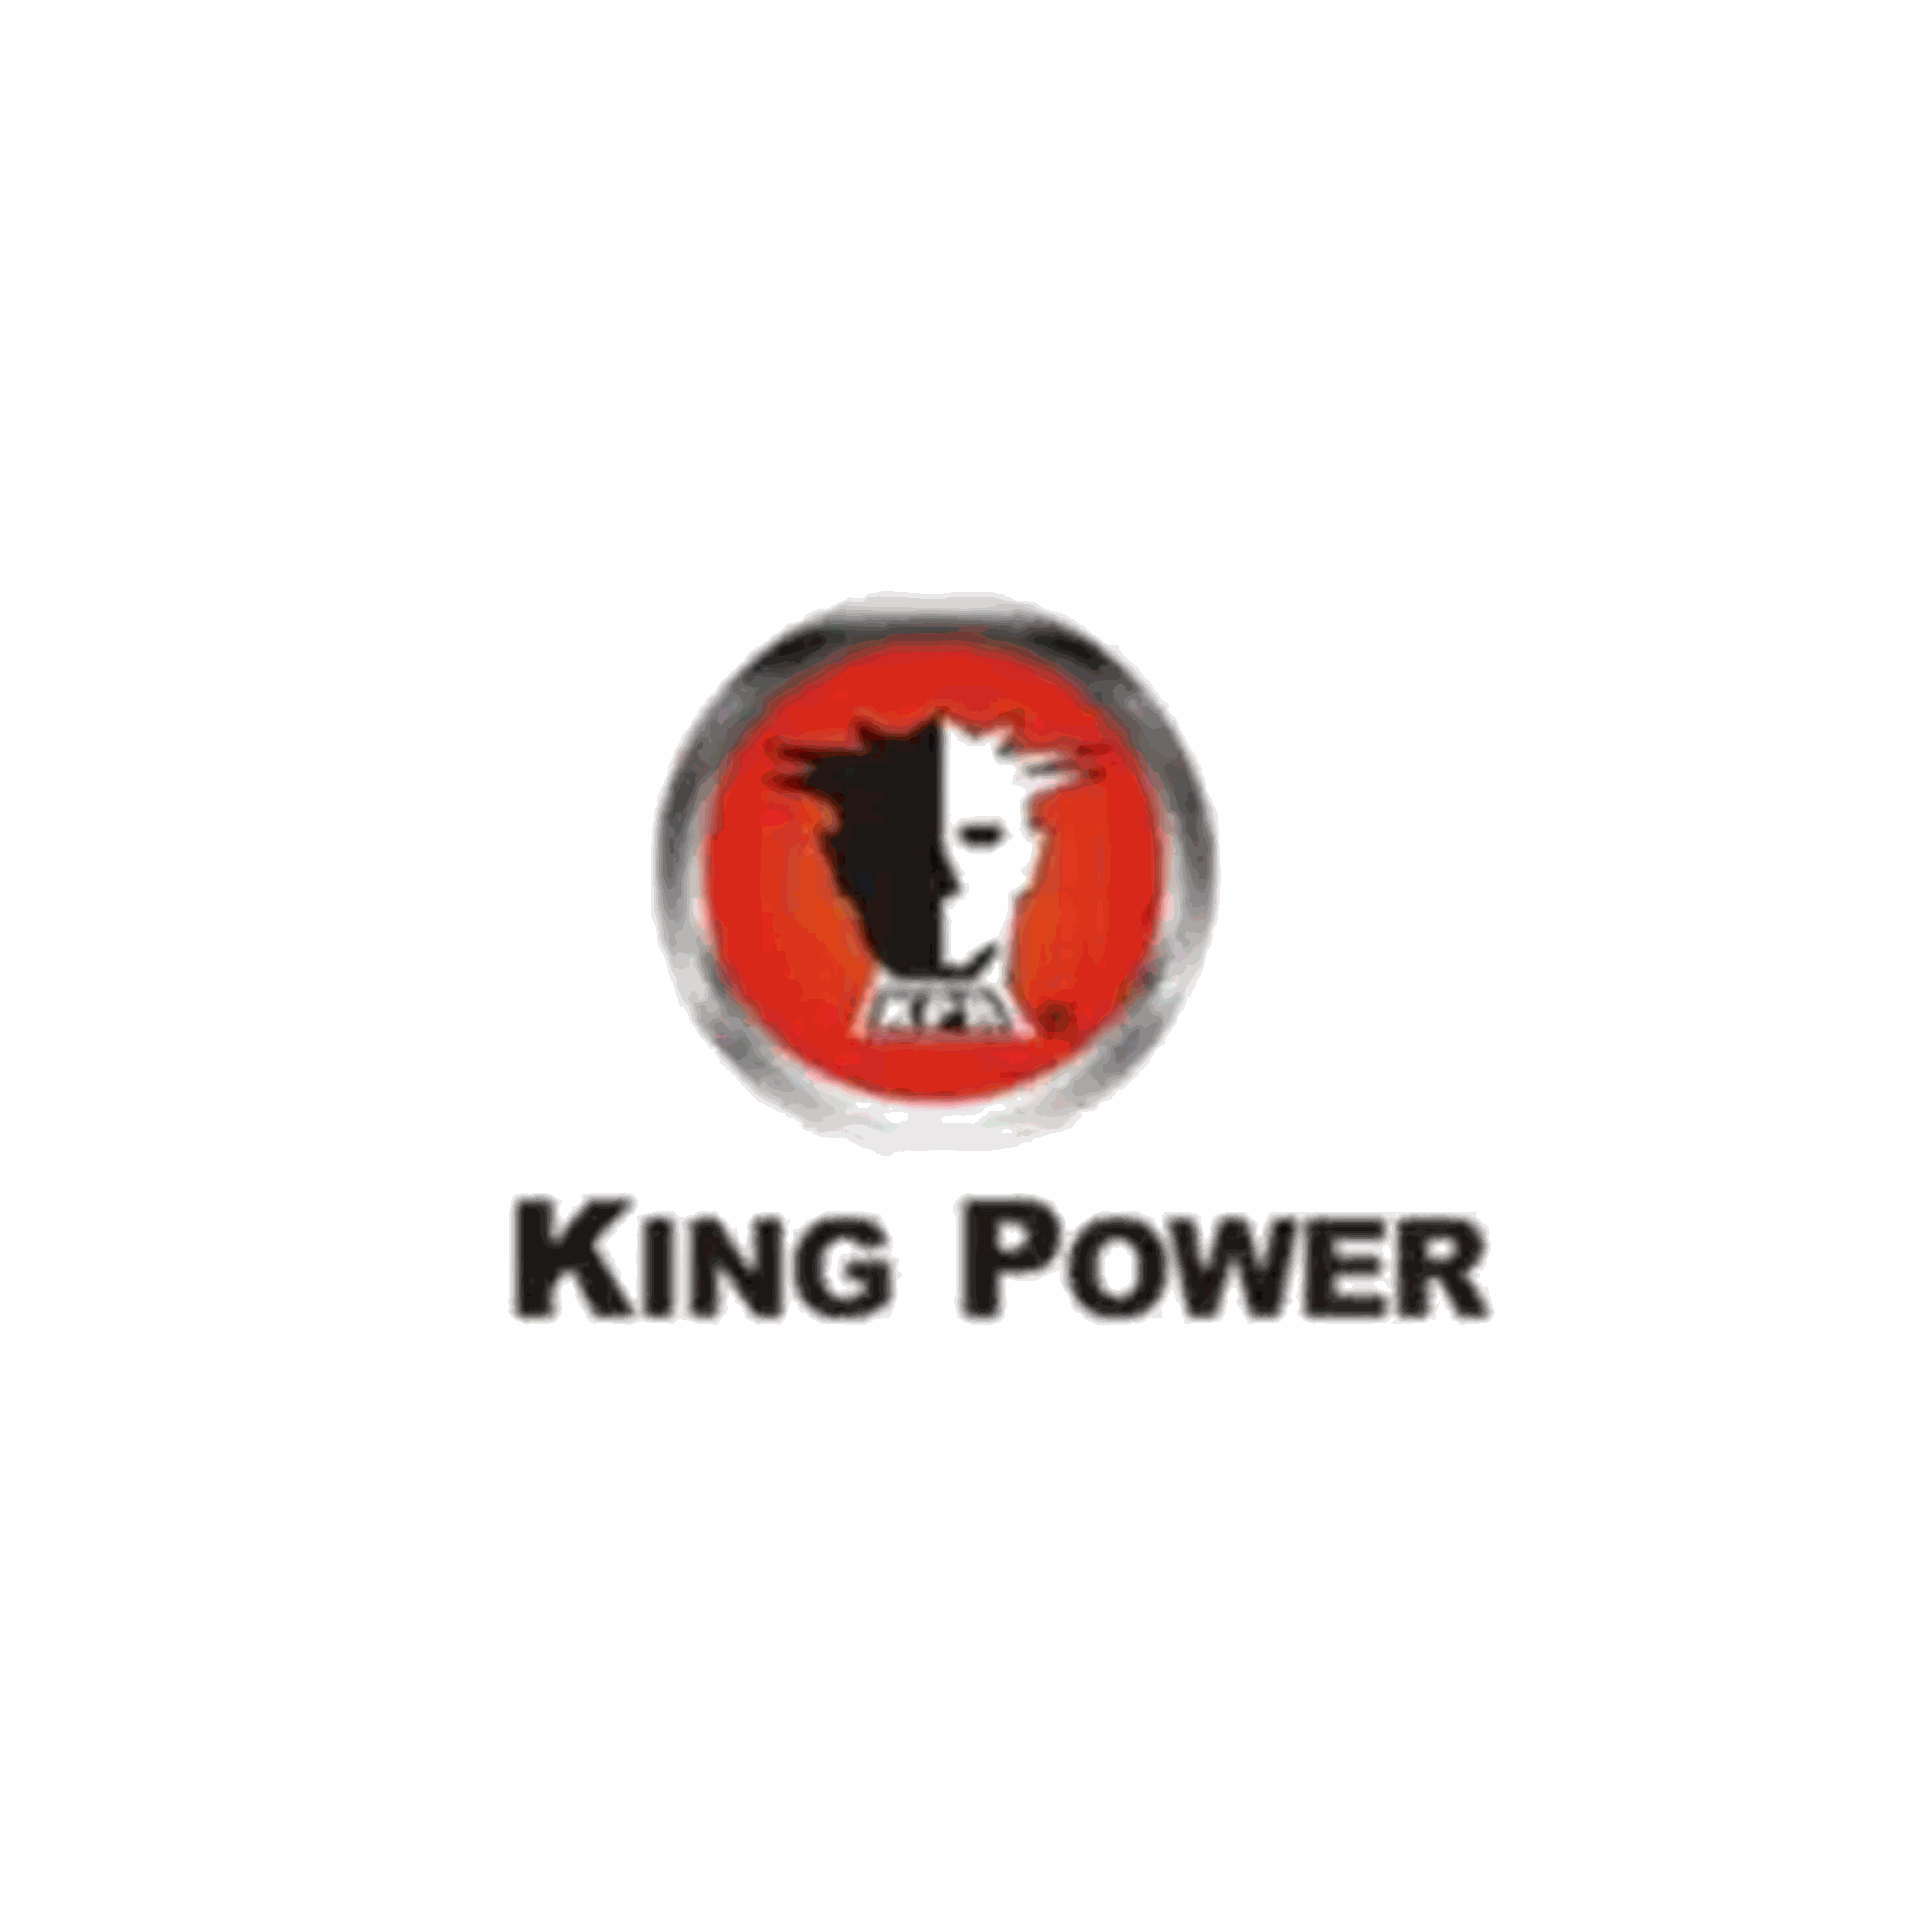 Brand: King Power